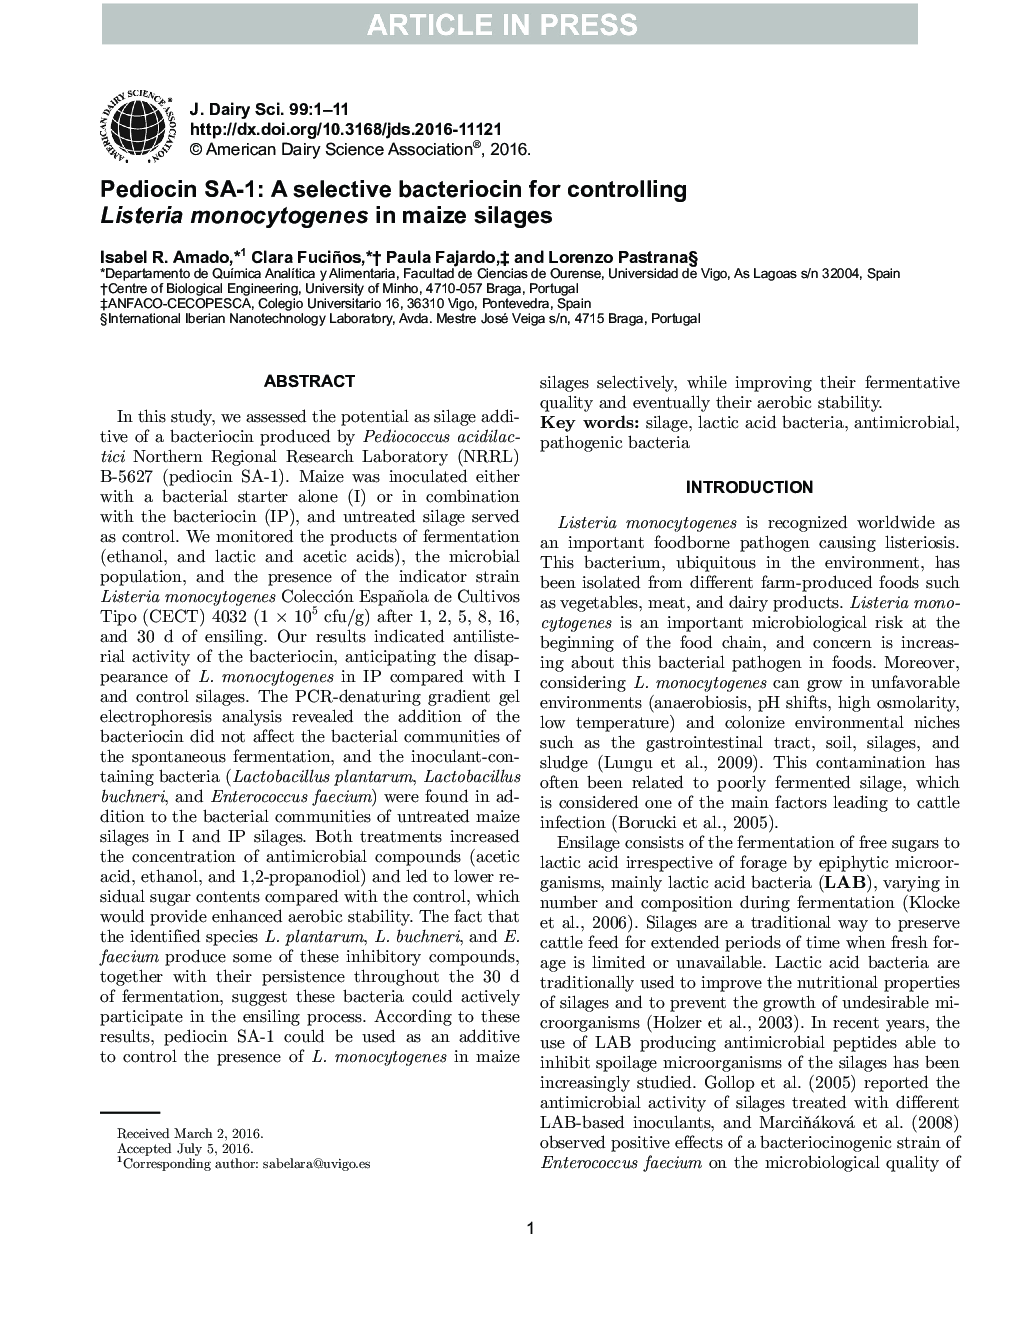 Pediocin SA-1: A selective bacteriocin for controlling Listeria monocytogenes in maize silages